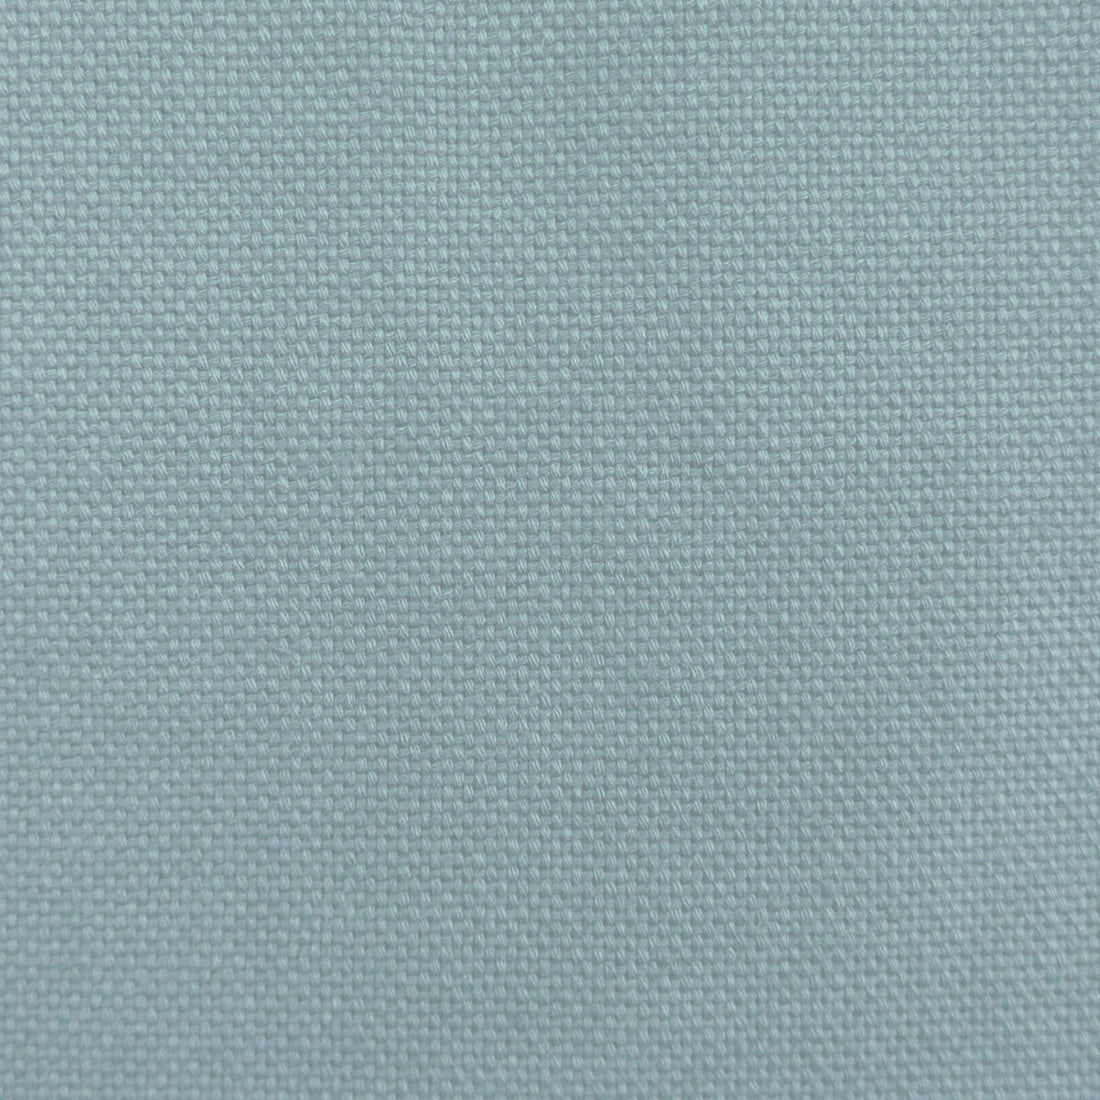 Dobra fabric in azul claro color - pattern LCT1075.038.0 - by Gaston y Daniela in the Lorenzo Castillo VII The Rectory collection